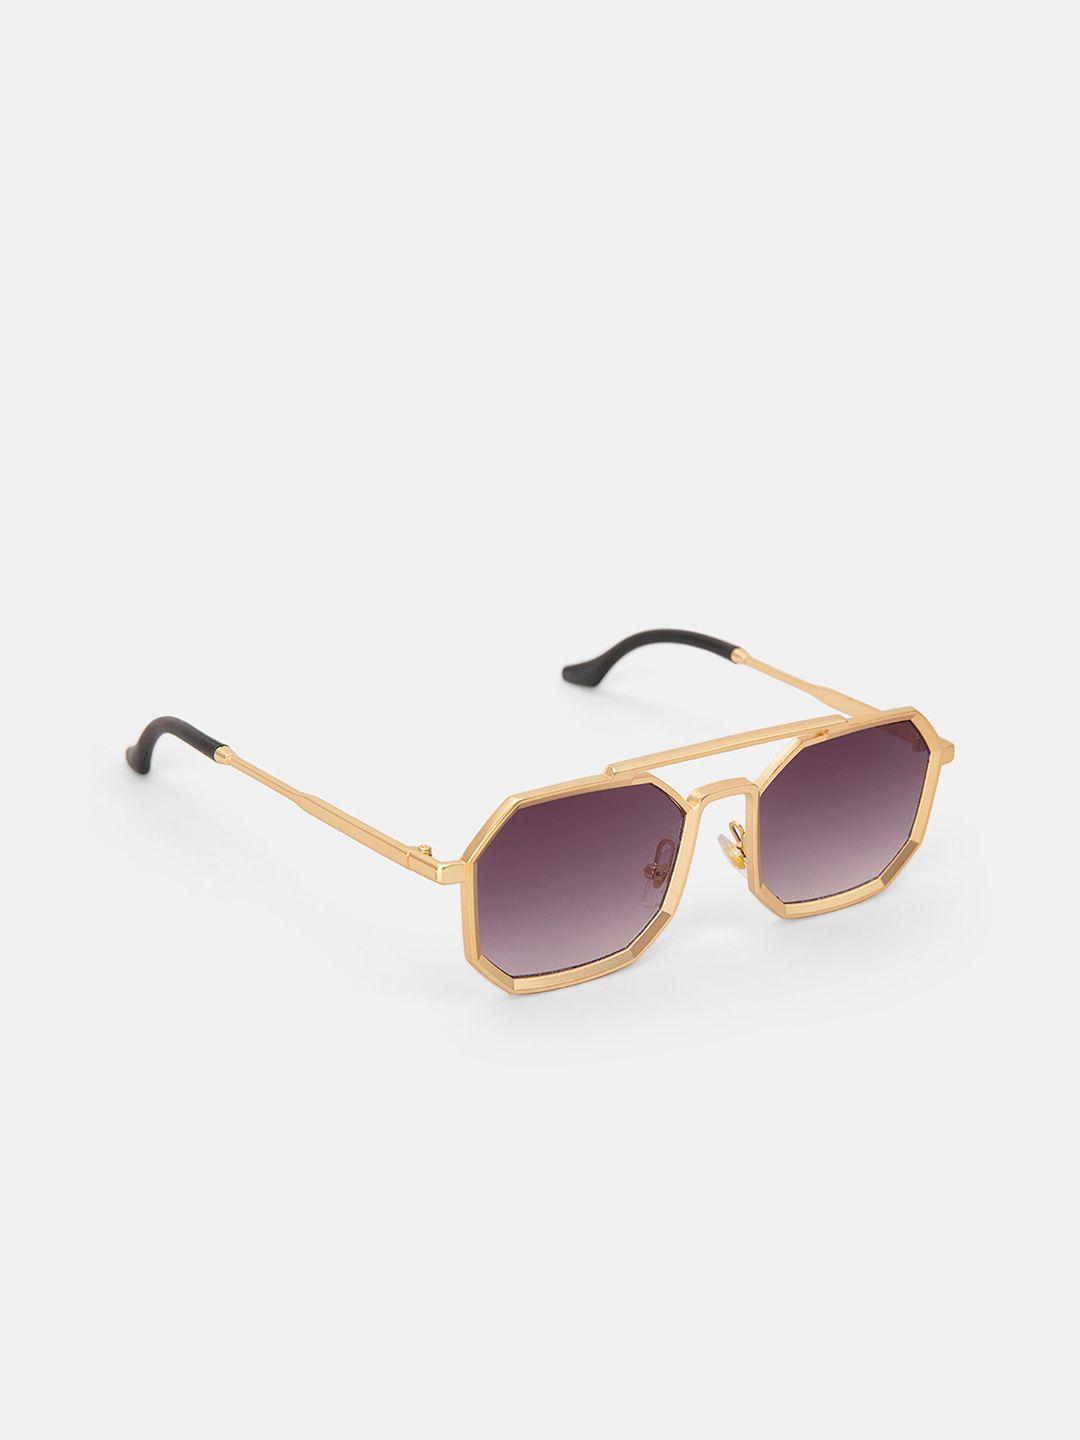 20dresses-women-purple-lens-&-gold-toned-other-sunglasses